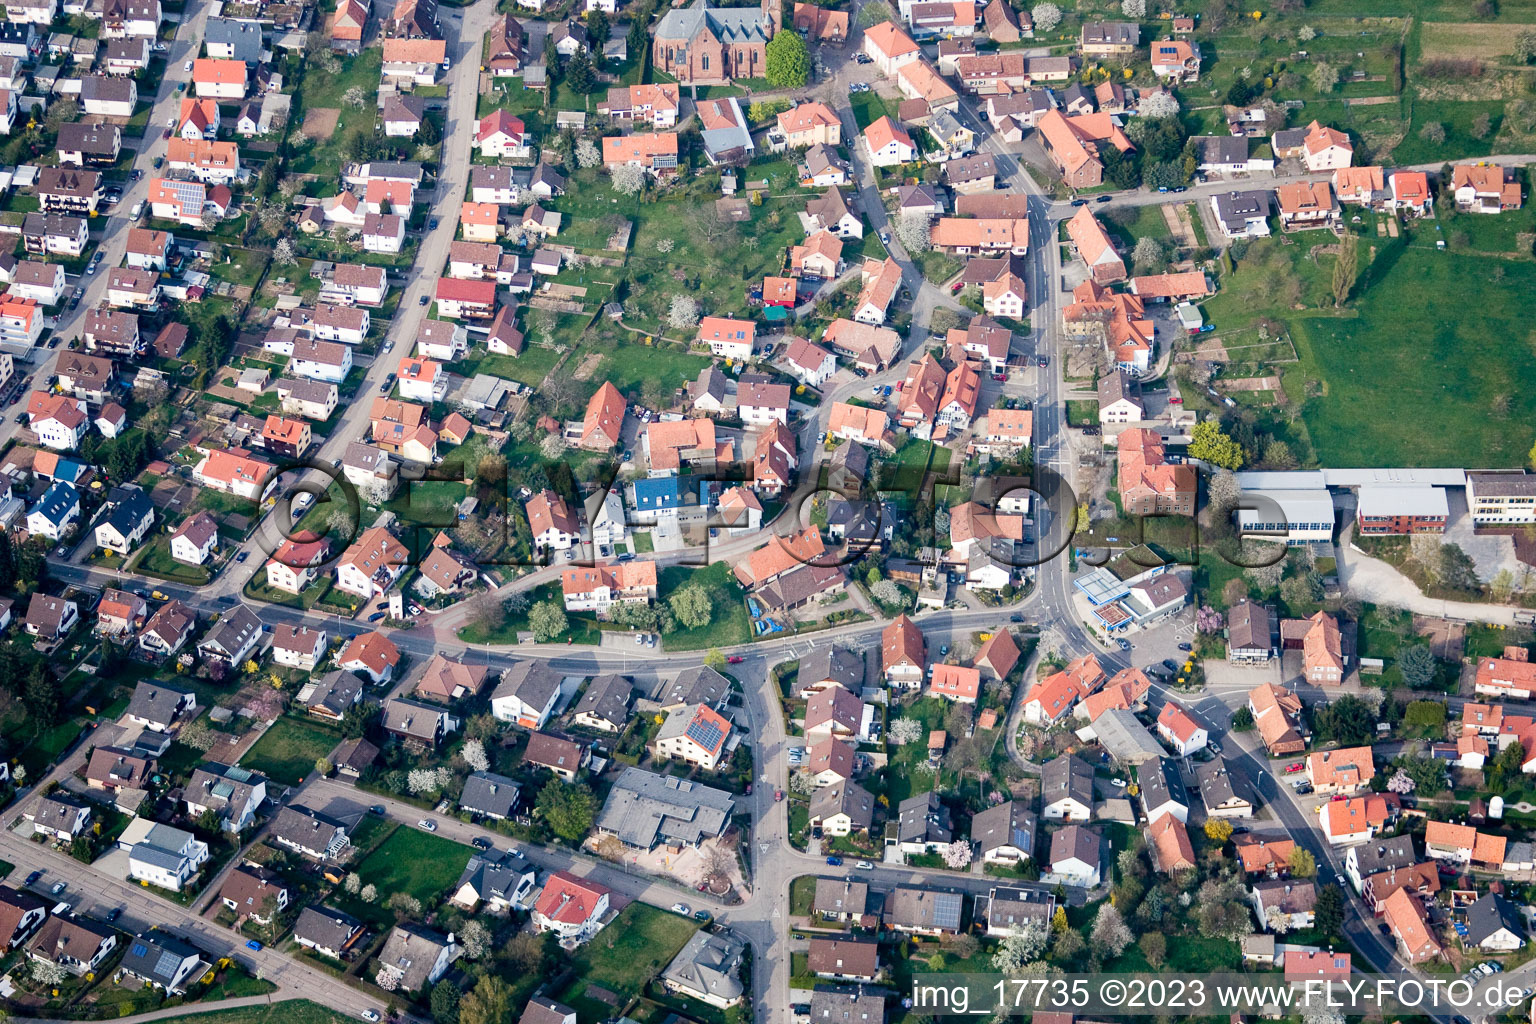 District Schöllbronn in Ettlingen in the state Baden-Wuerttemberg, Germany from a drone